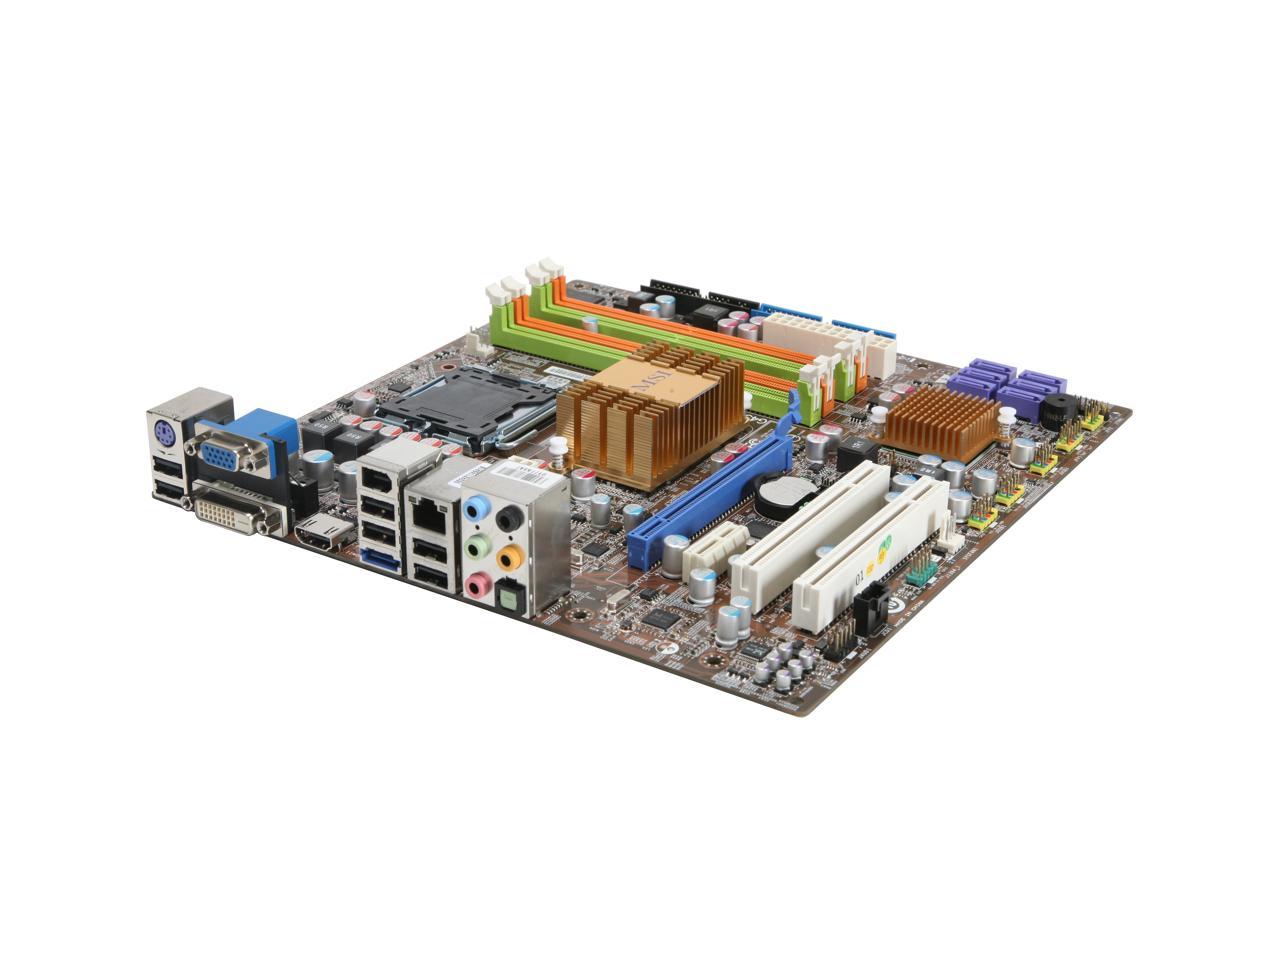 MSI G45M Digital LGA 775 Micro ATX Intel Motherboard - Newegg.com